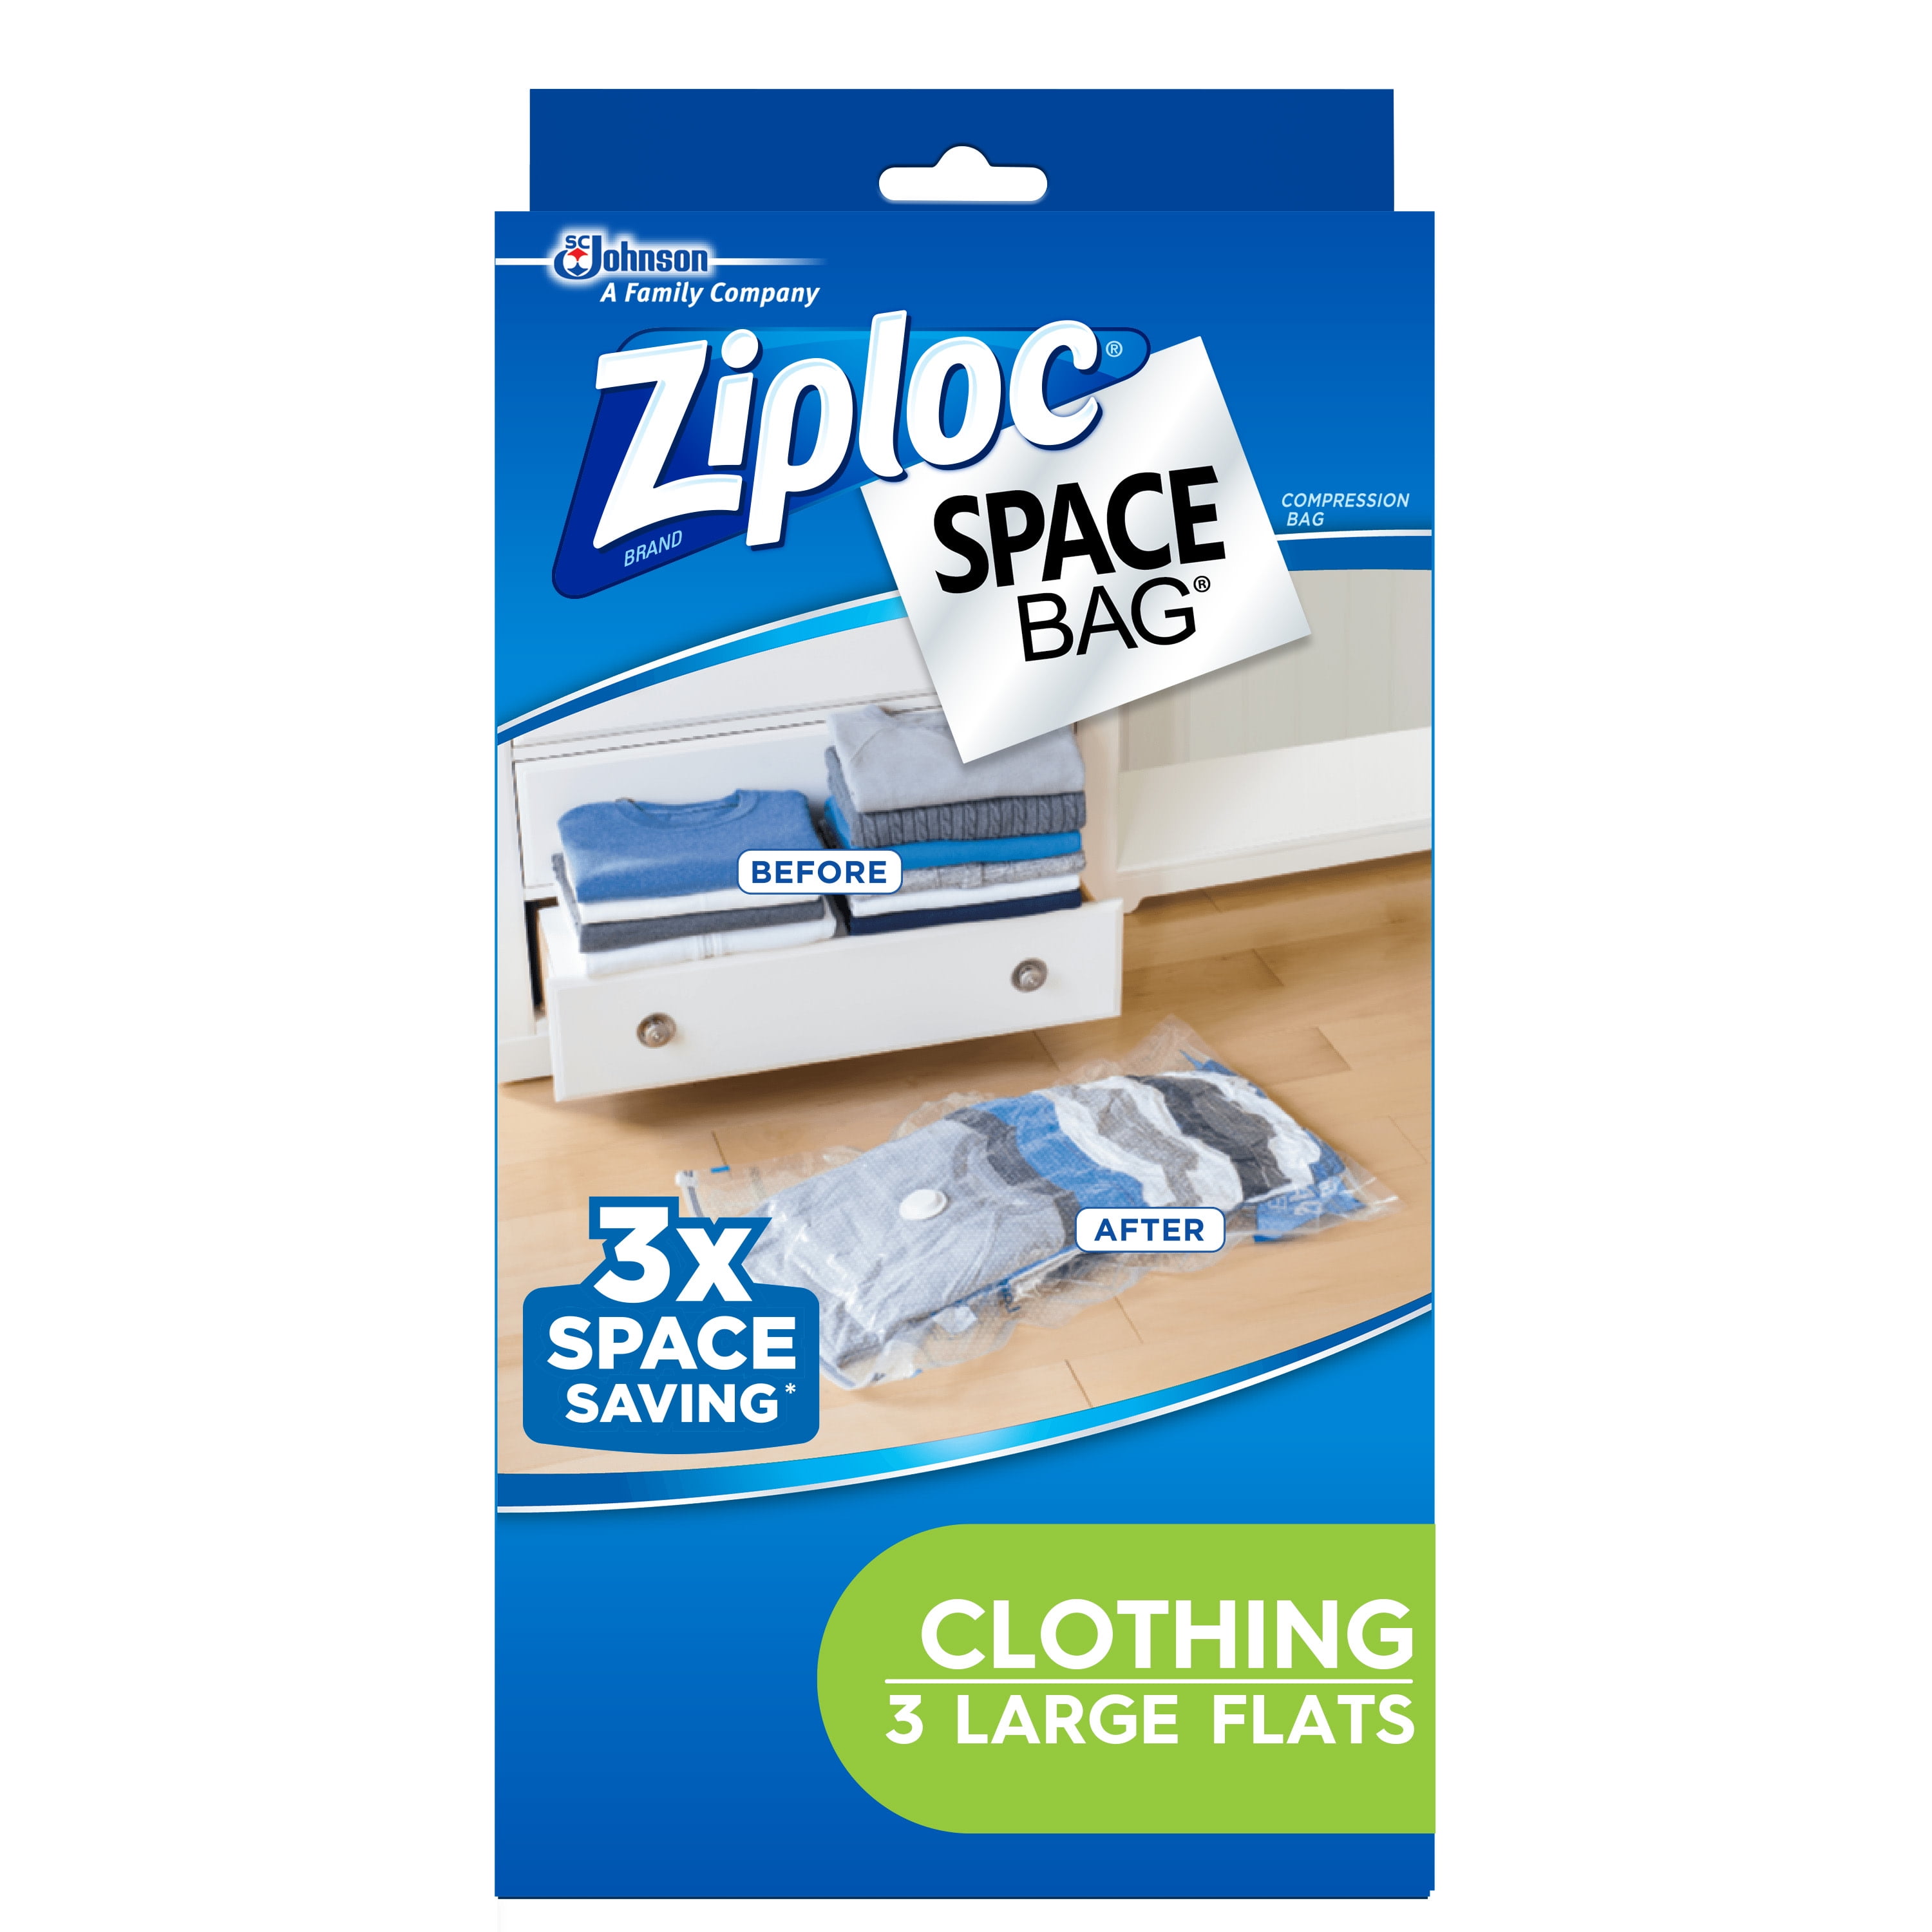 Ziploc Space Bag 3ct Combo Pack (1 Medium Flat, 1 Large Flat, 1